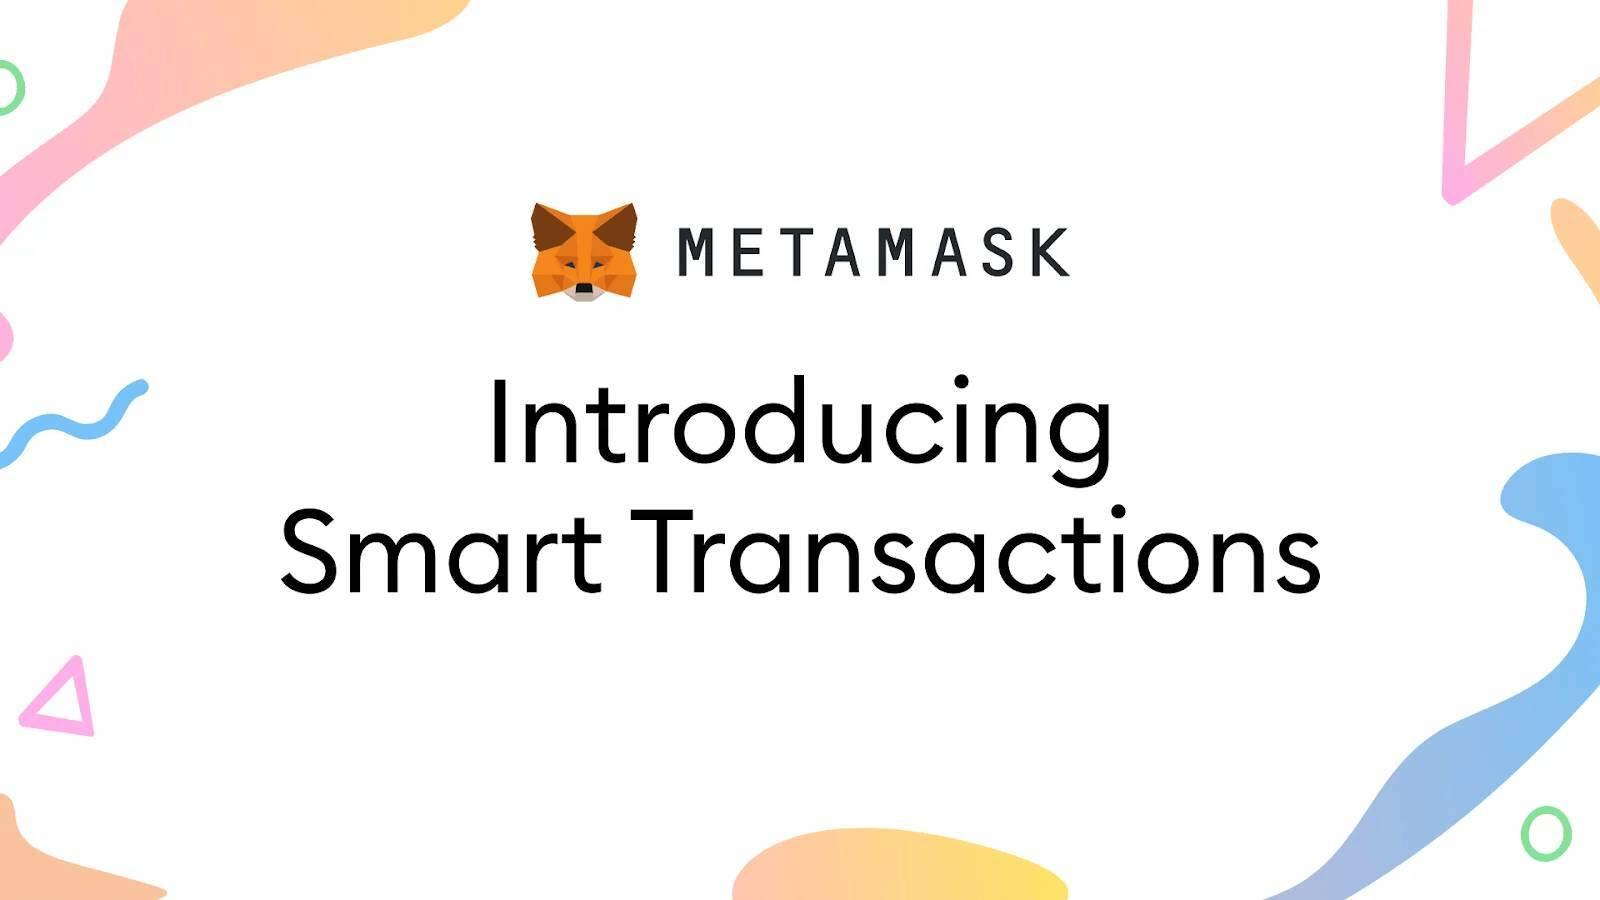 metamask-ra-mat-tinh-nang-smart-transactions-ho-tro-phi-re-an-danh-khoi-mev-bot